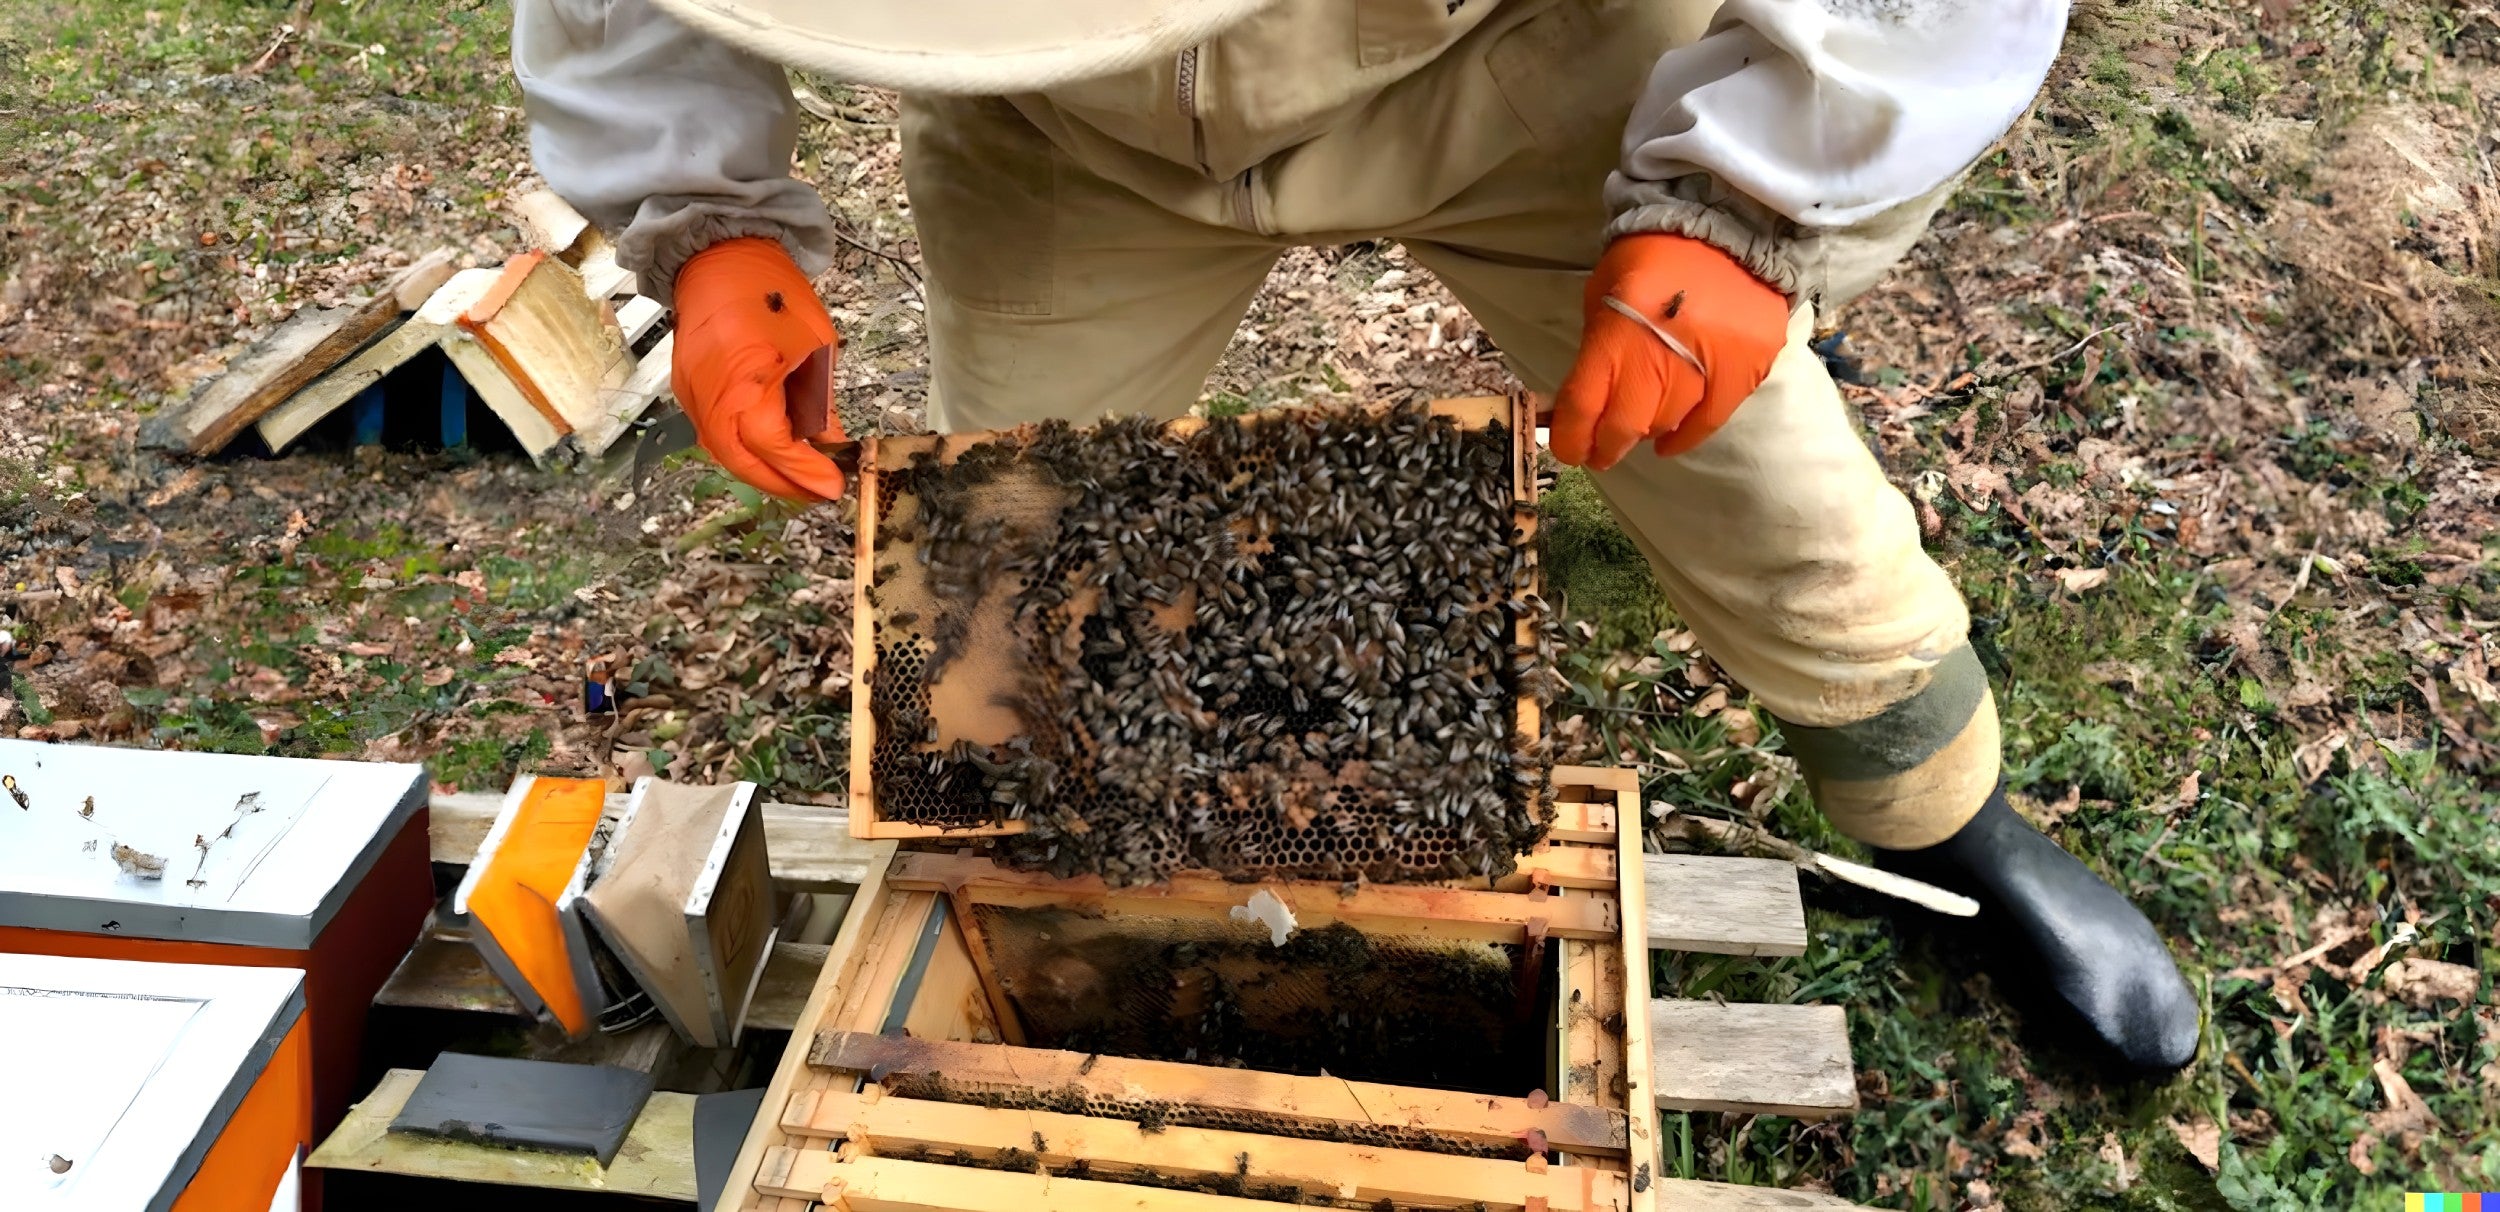 Meeting the Beekeeper: Martin Pope